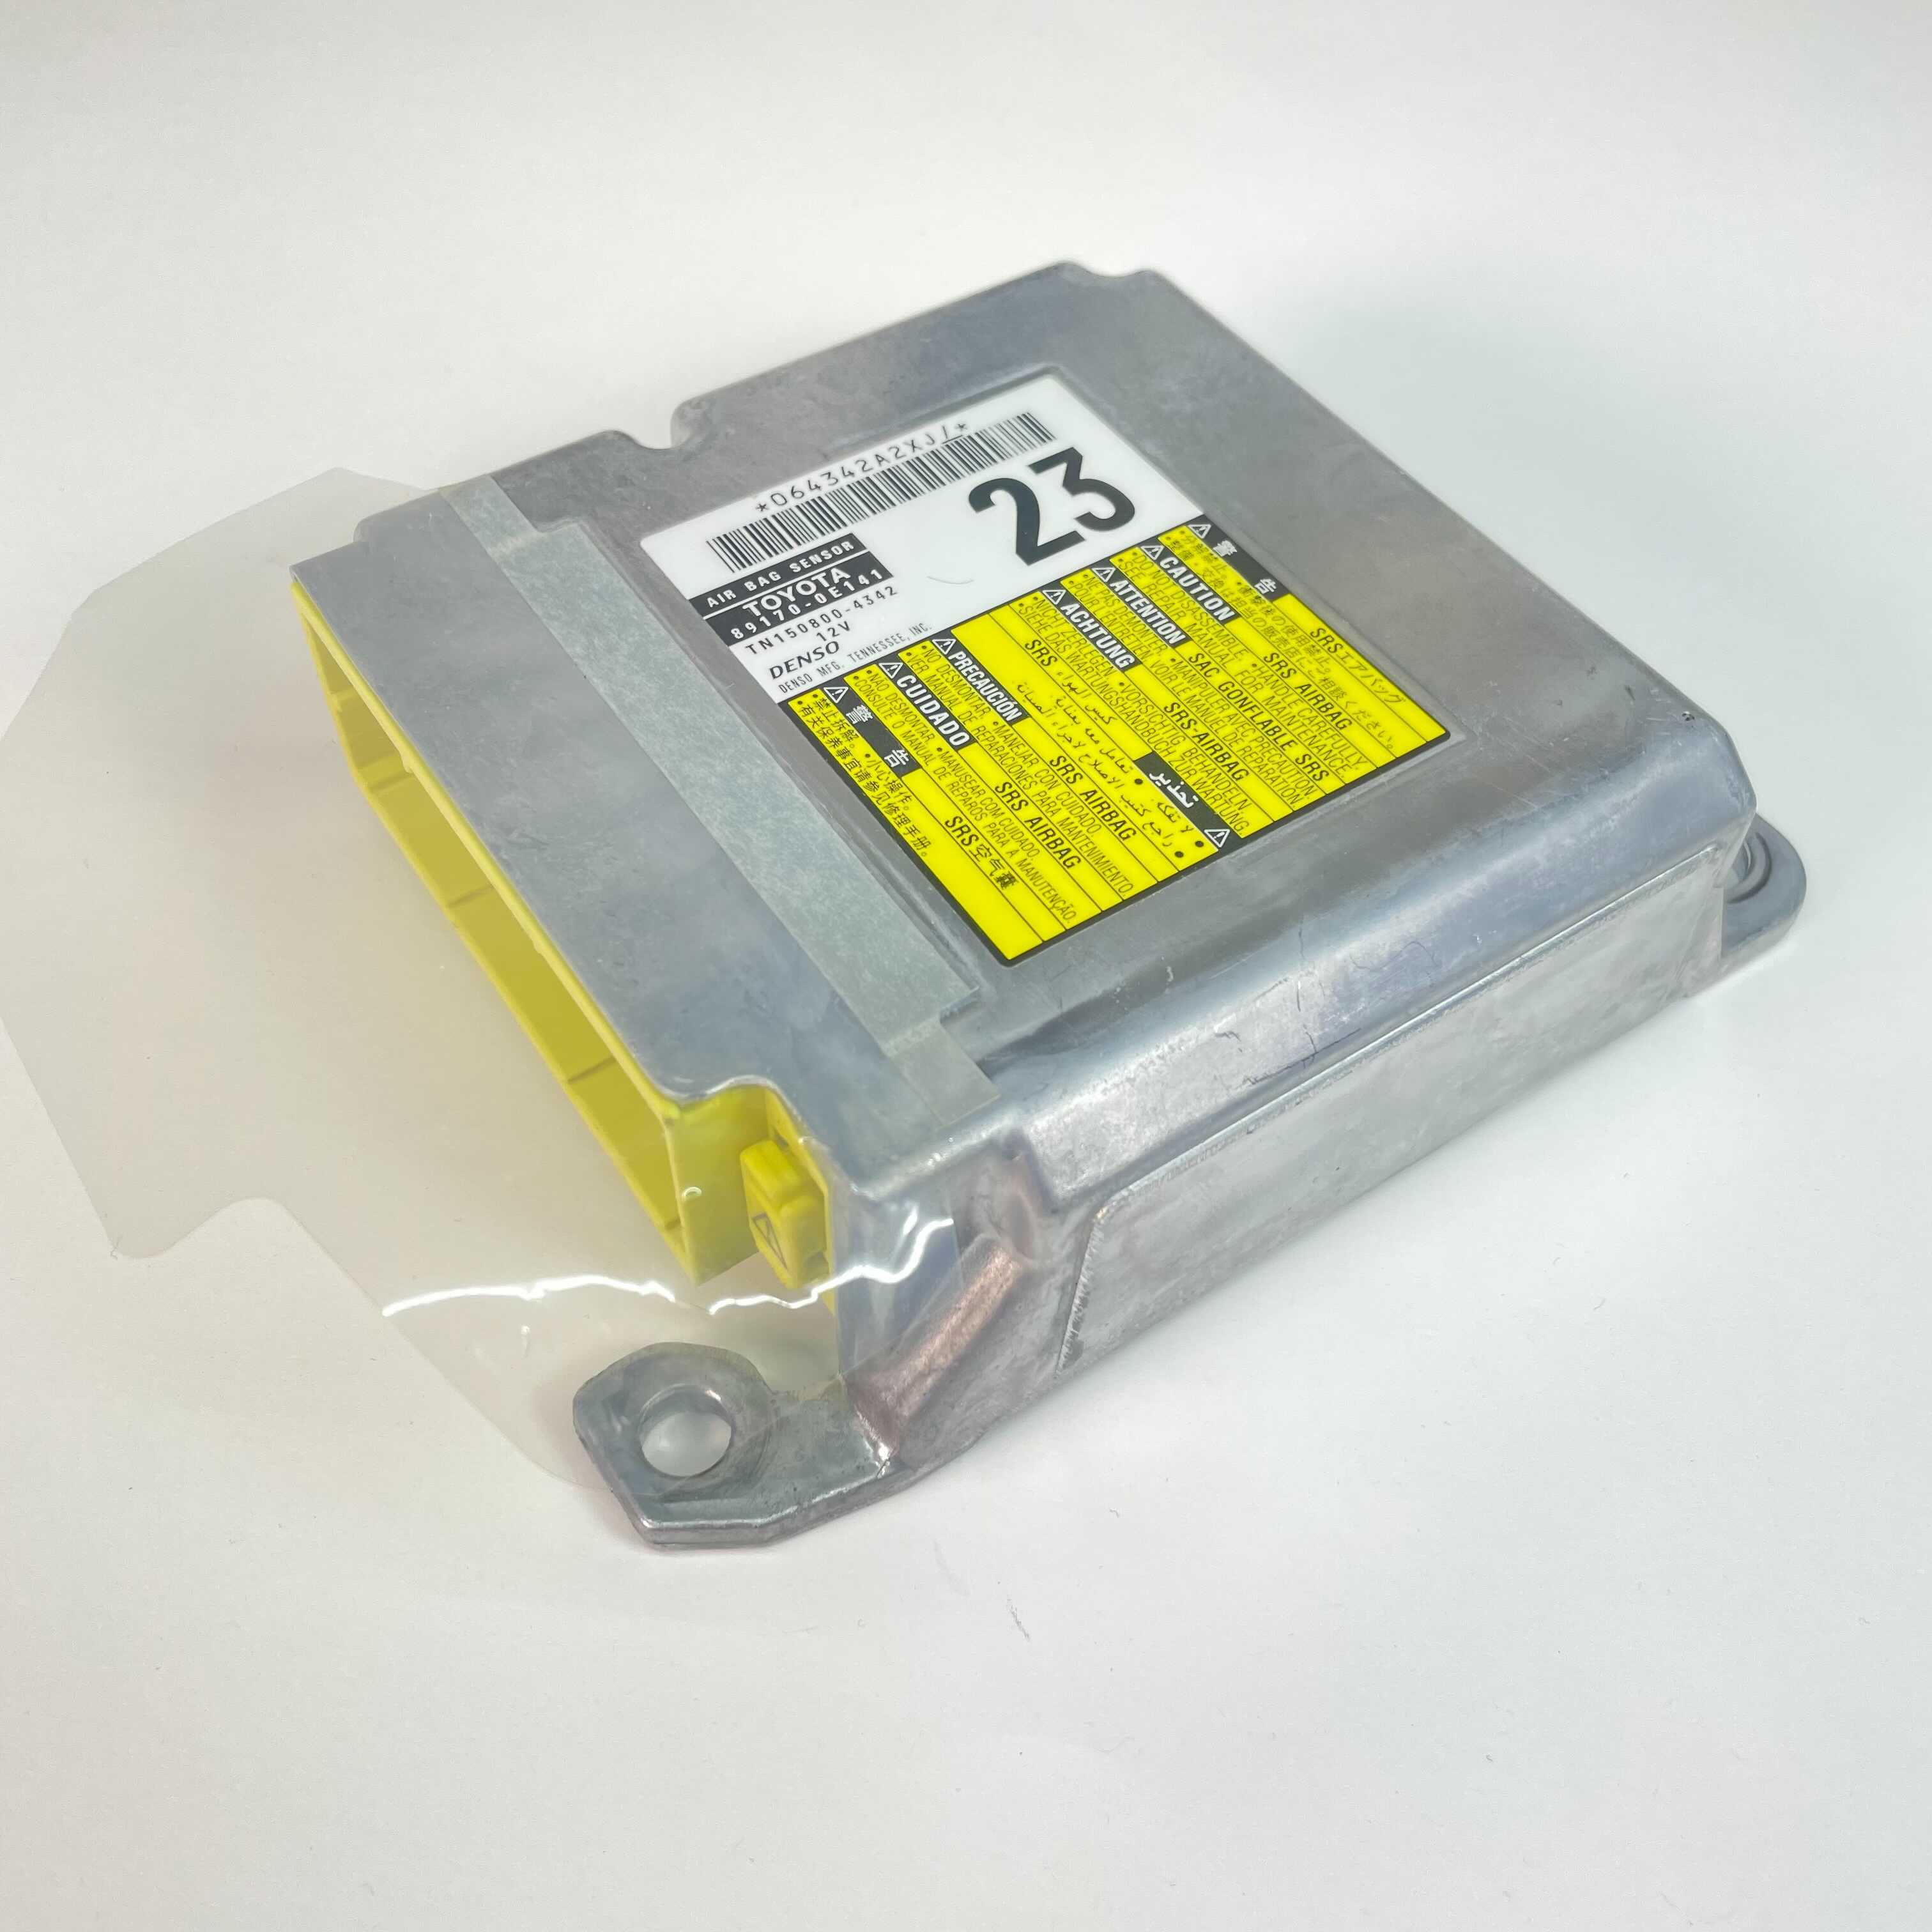 TOYOTA HIGHLANDER SRS Airbag Computer Diagnostic Control Module PART #891700E141